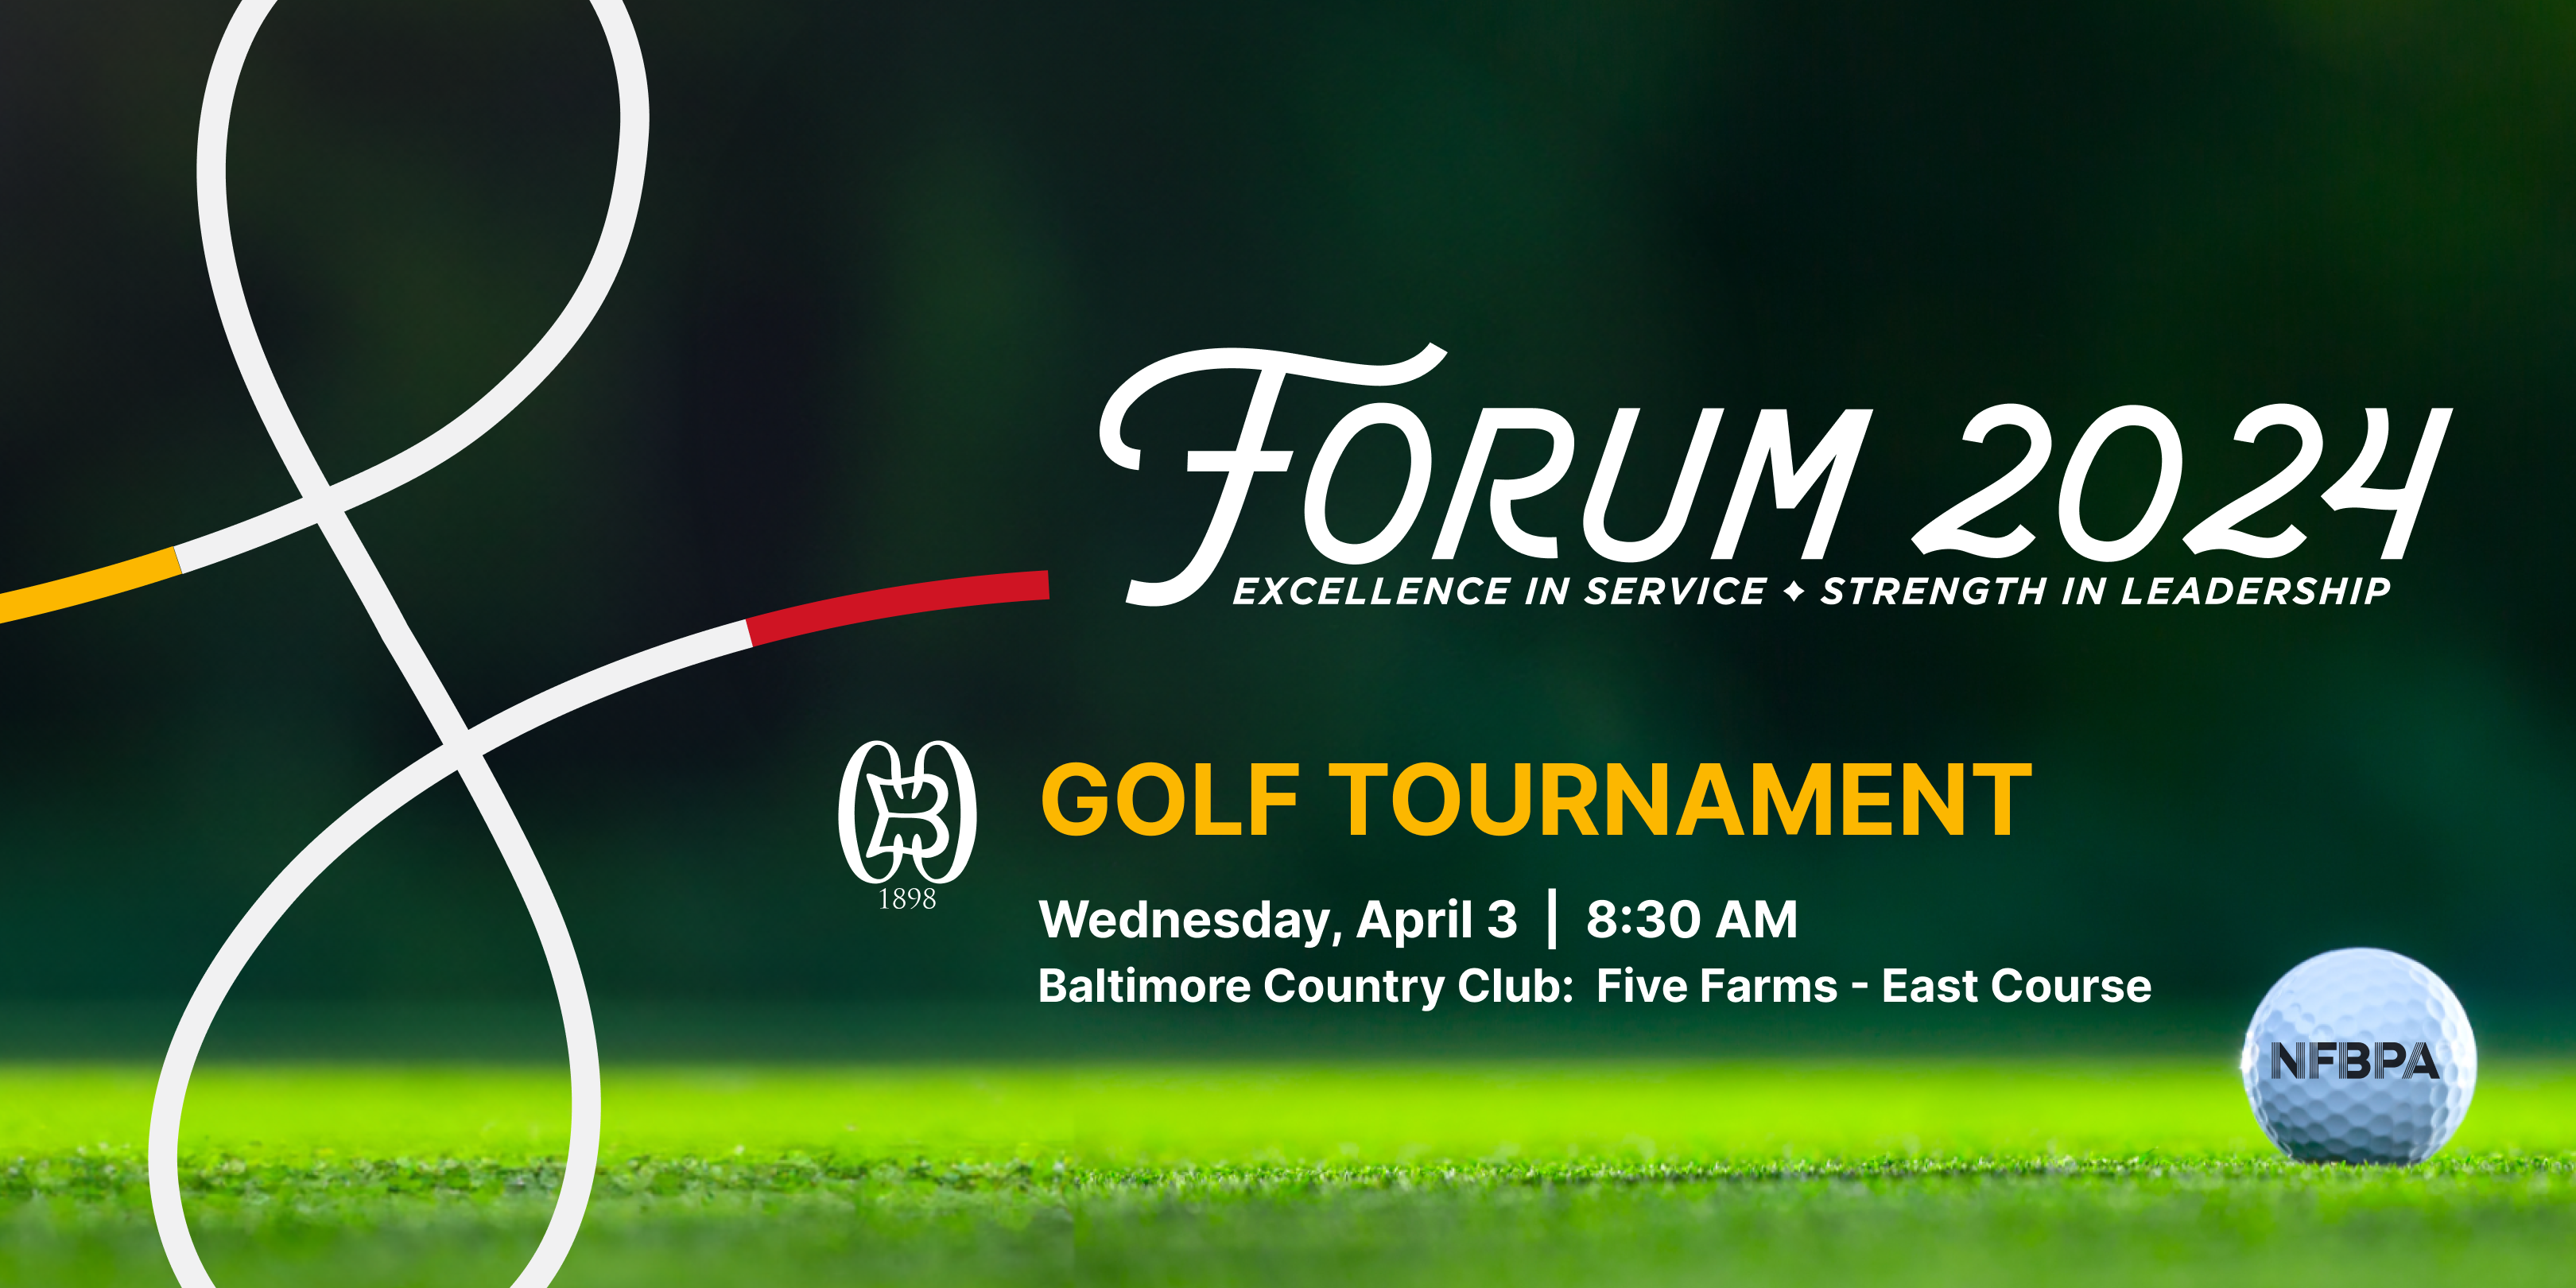 FORUM 2024 Golf Tournament